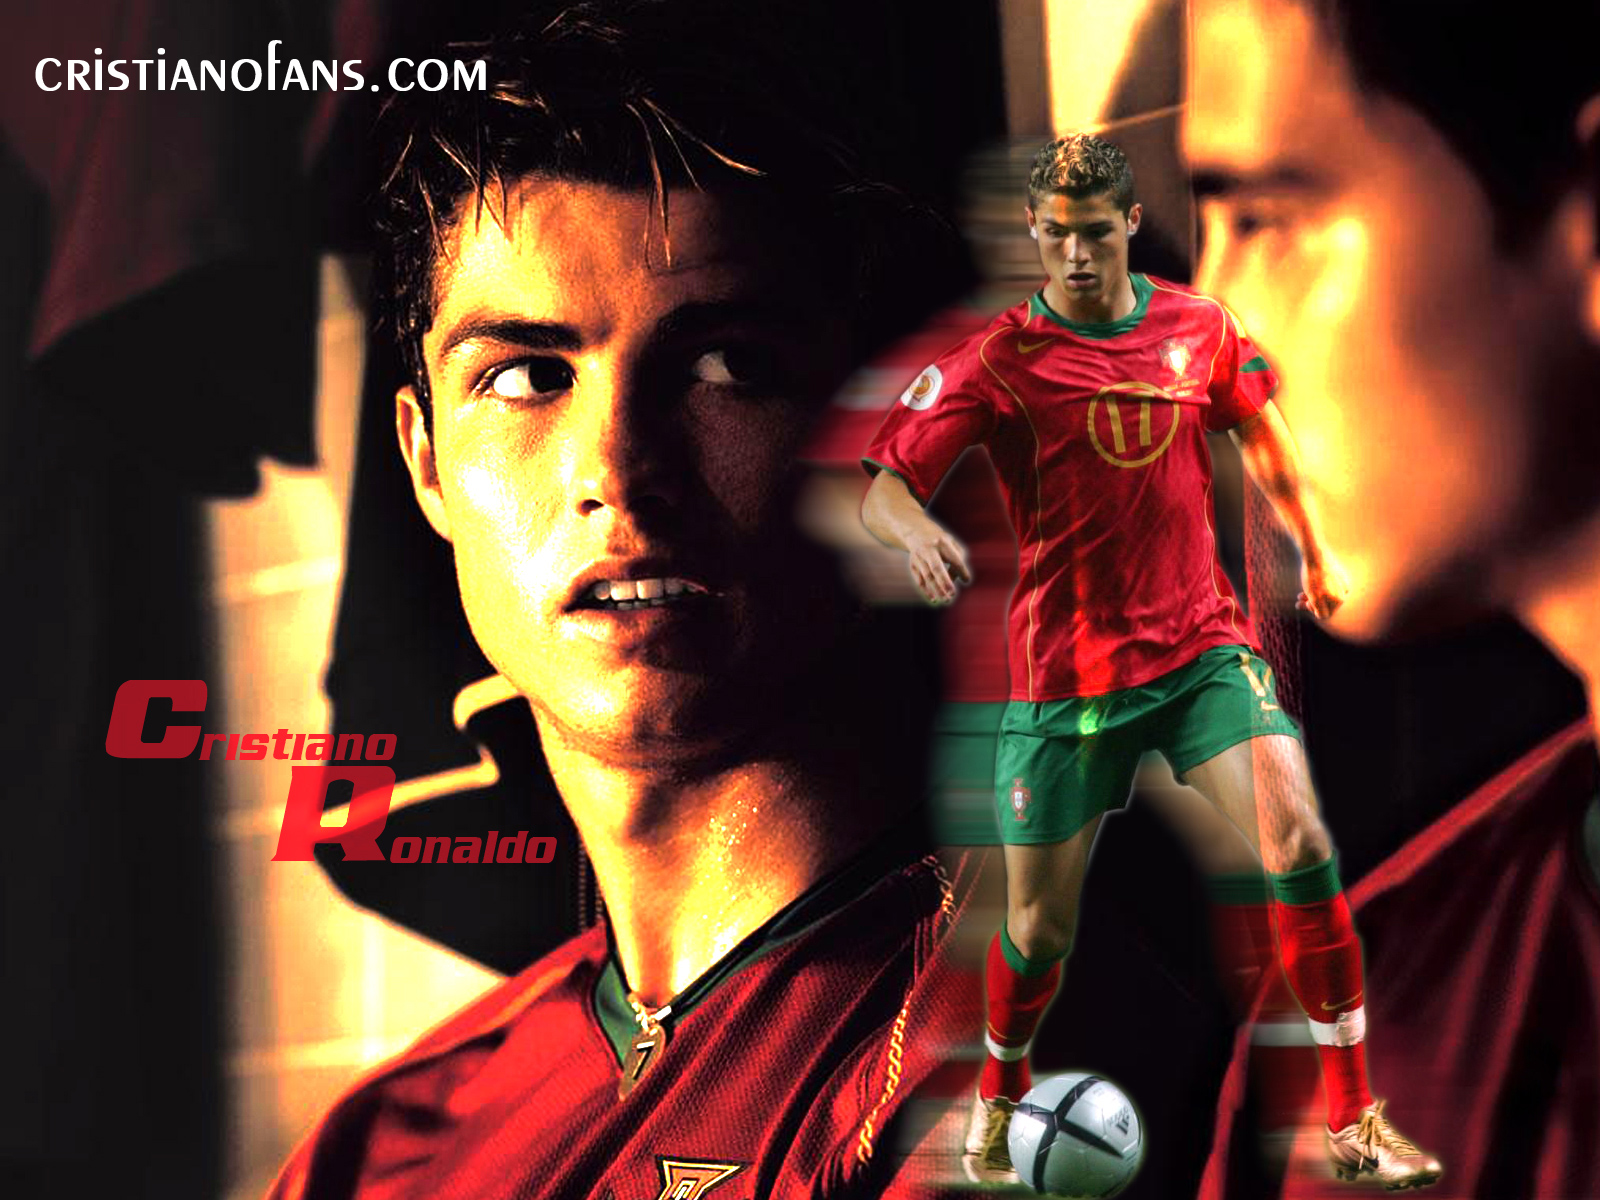 http://1.bp.blogspot.com/_rAsiSS06Zgg/TP5VuU5D8XI/AAAAAAAABY4/PtLjokF1-q0/s1600/Cristiano-Ronaldo-Wallpaper-015.jpg